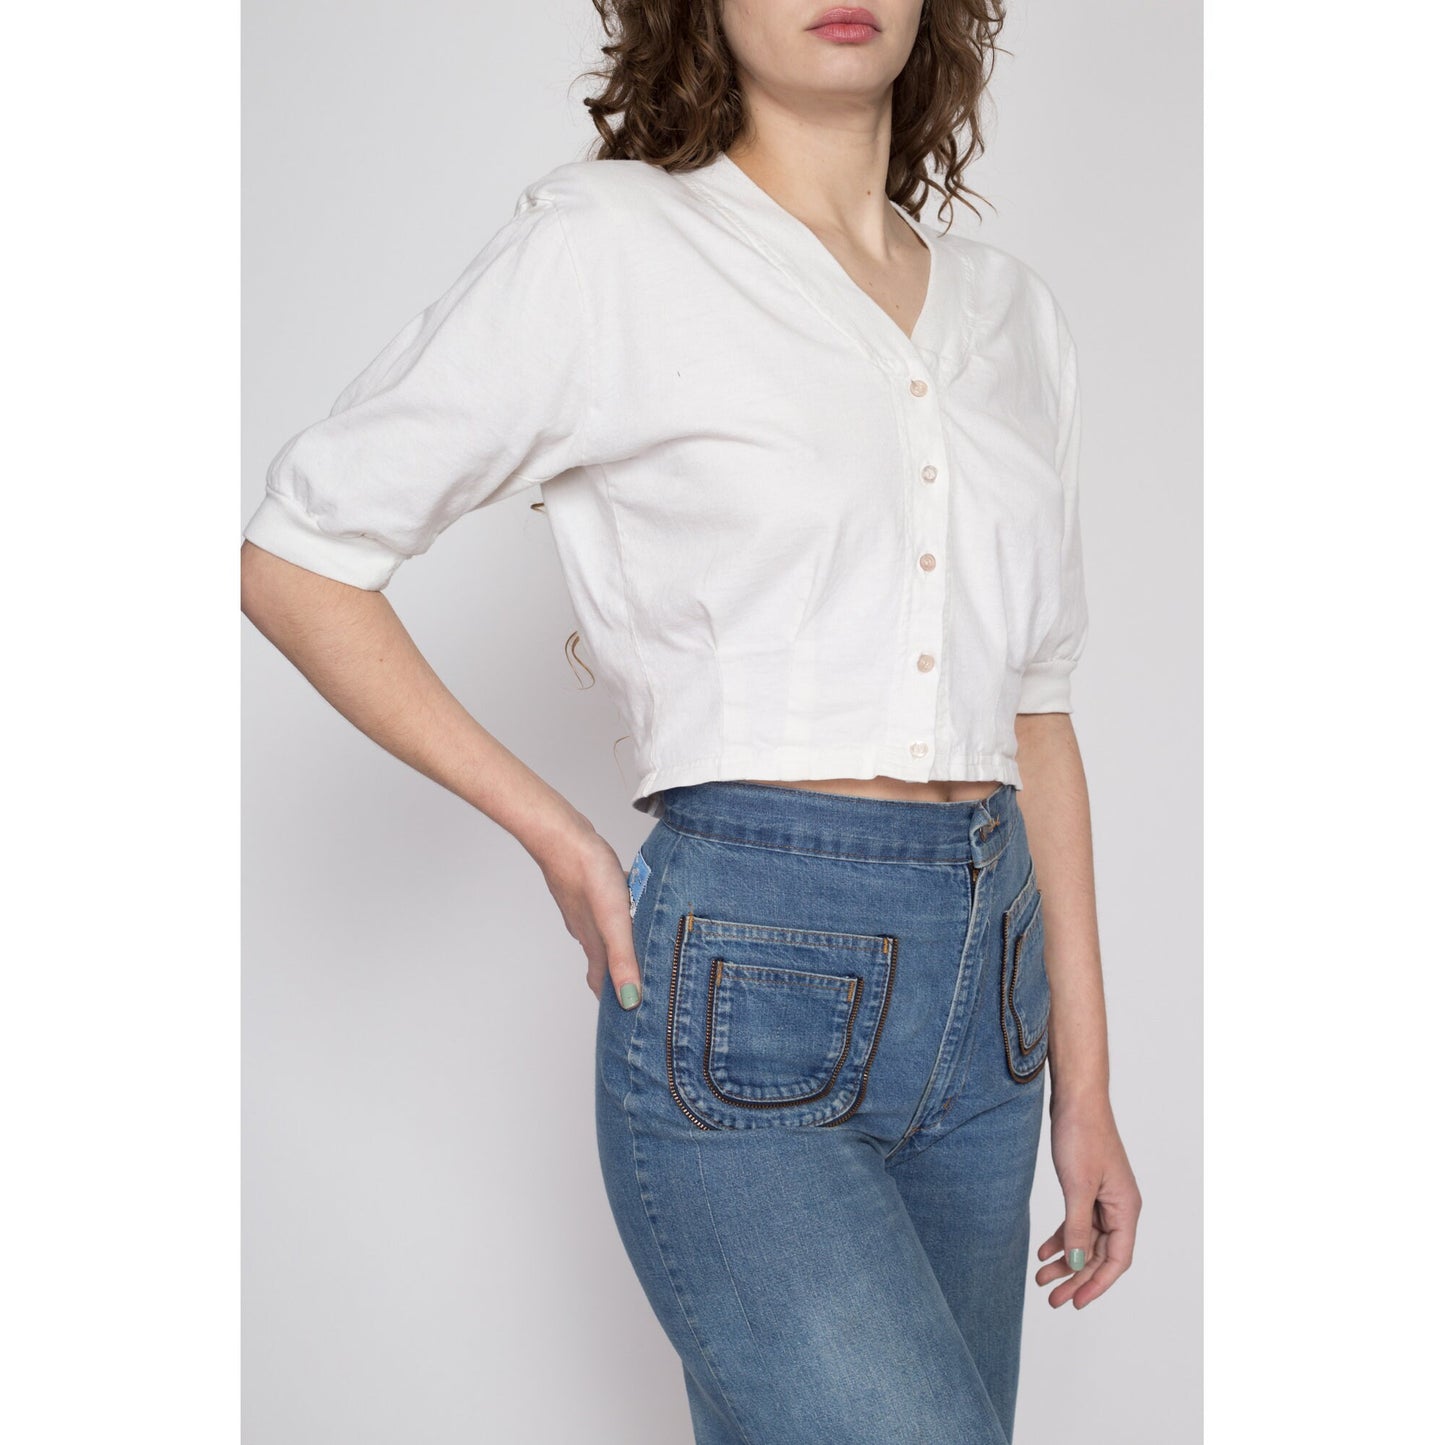 Large 80s White Button Up Crop Top | Vintage Short Sleeve V Neck Cropped Blouse